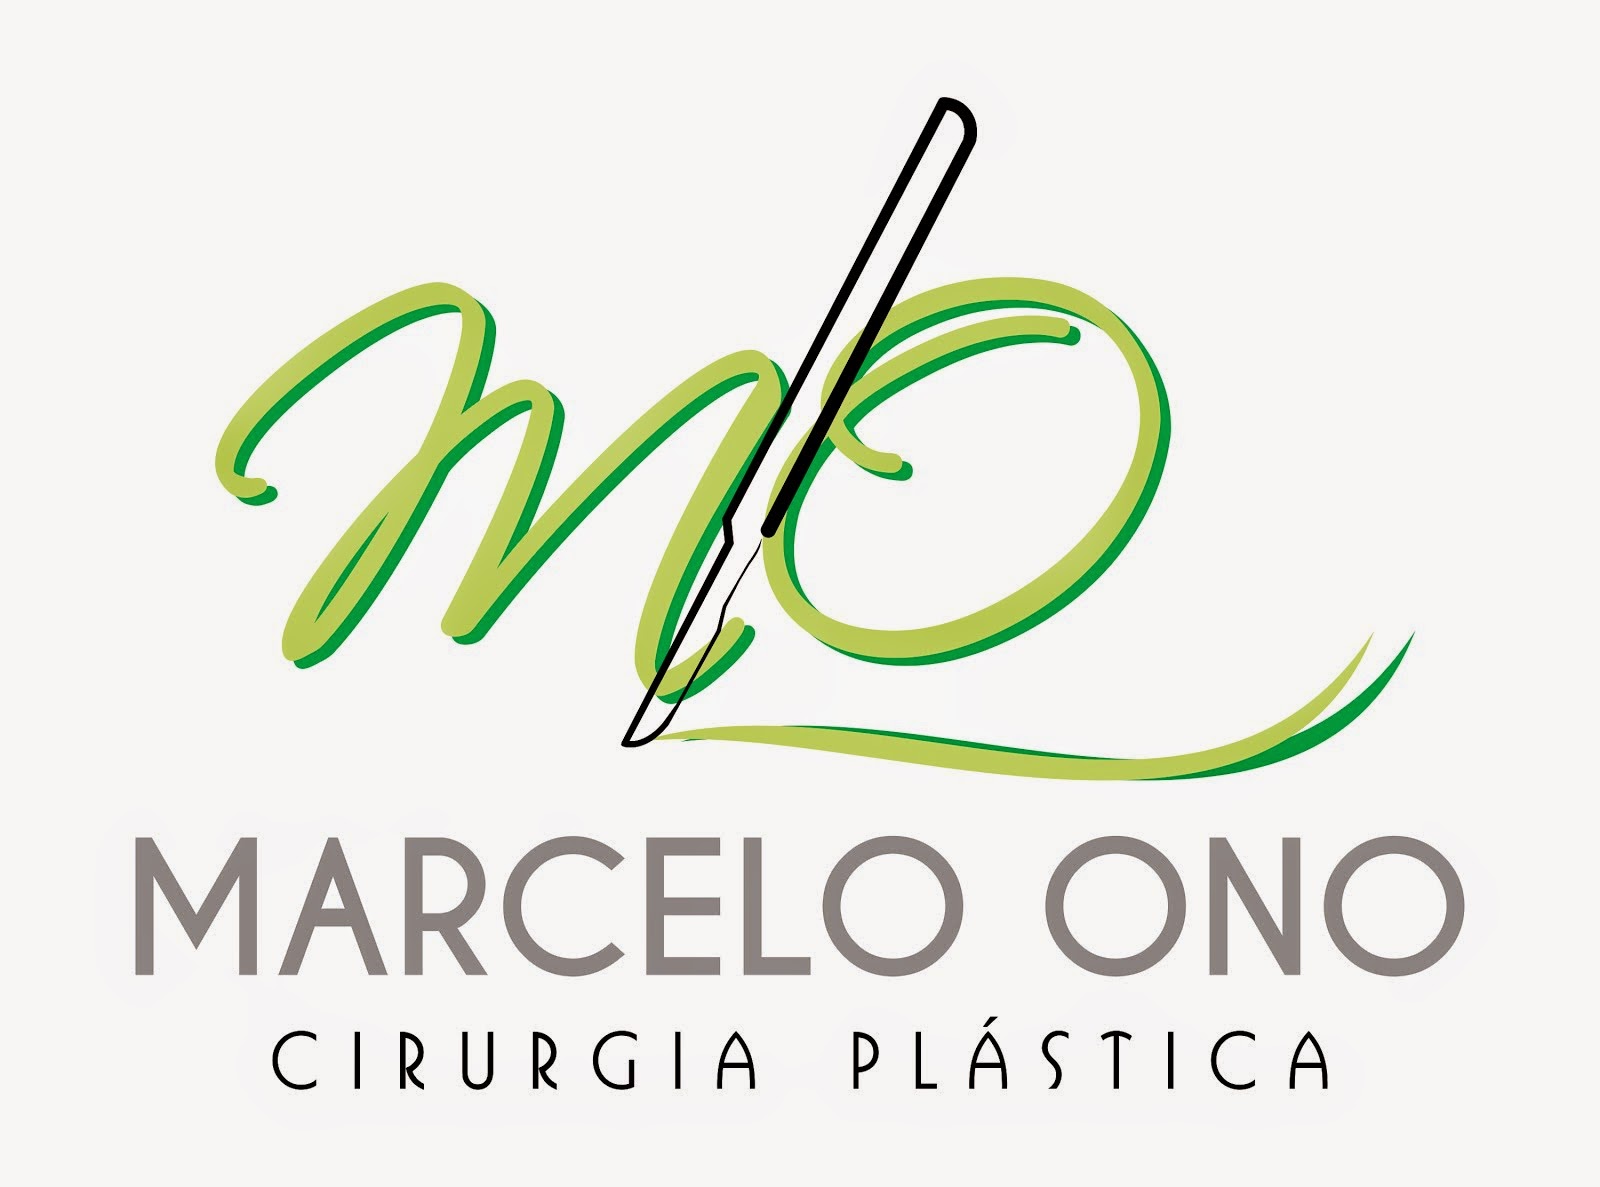 Marcelo Ono